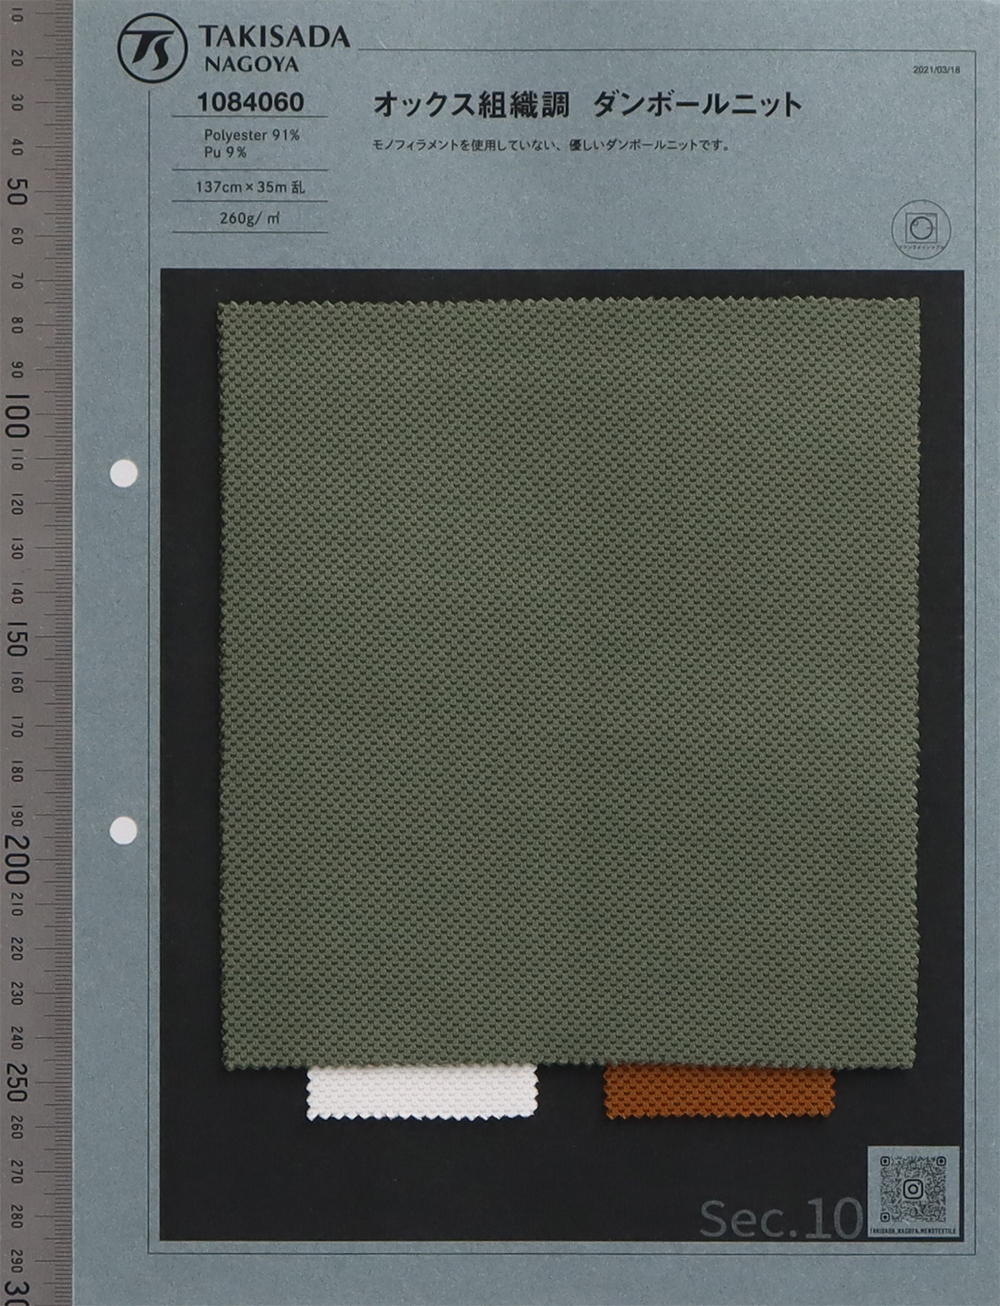 1084060 Oxford Pattern Double Knit[Textile / Fabric] Takisada Nagoya